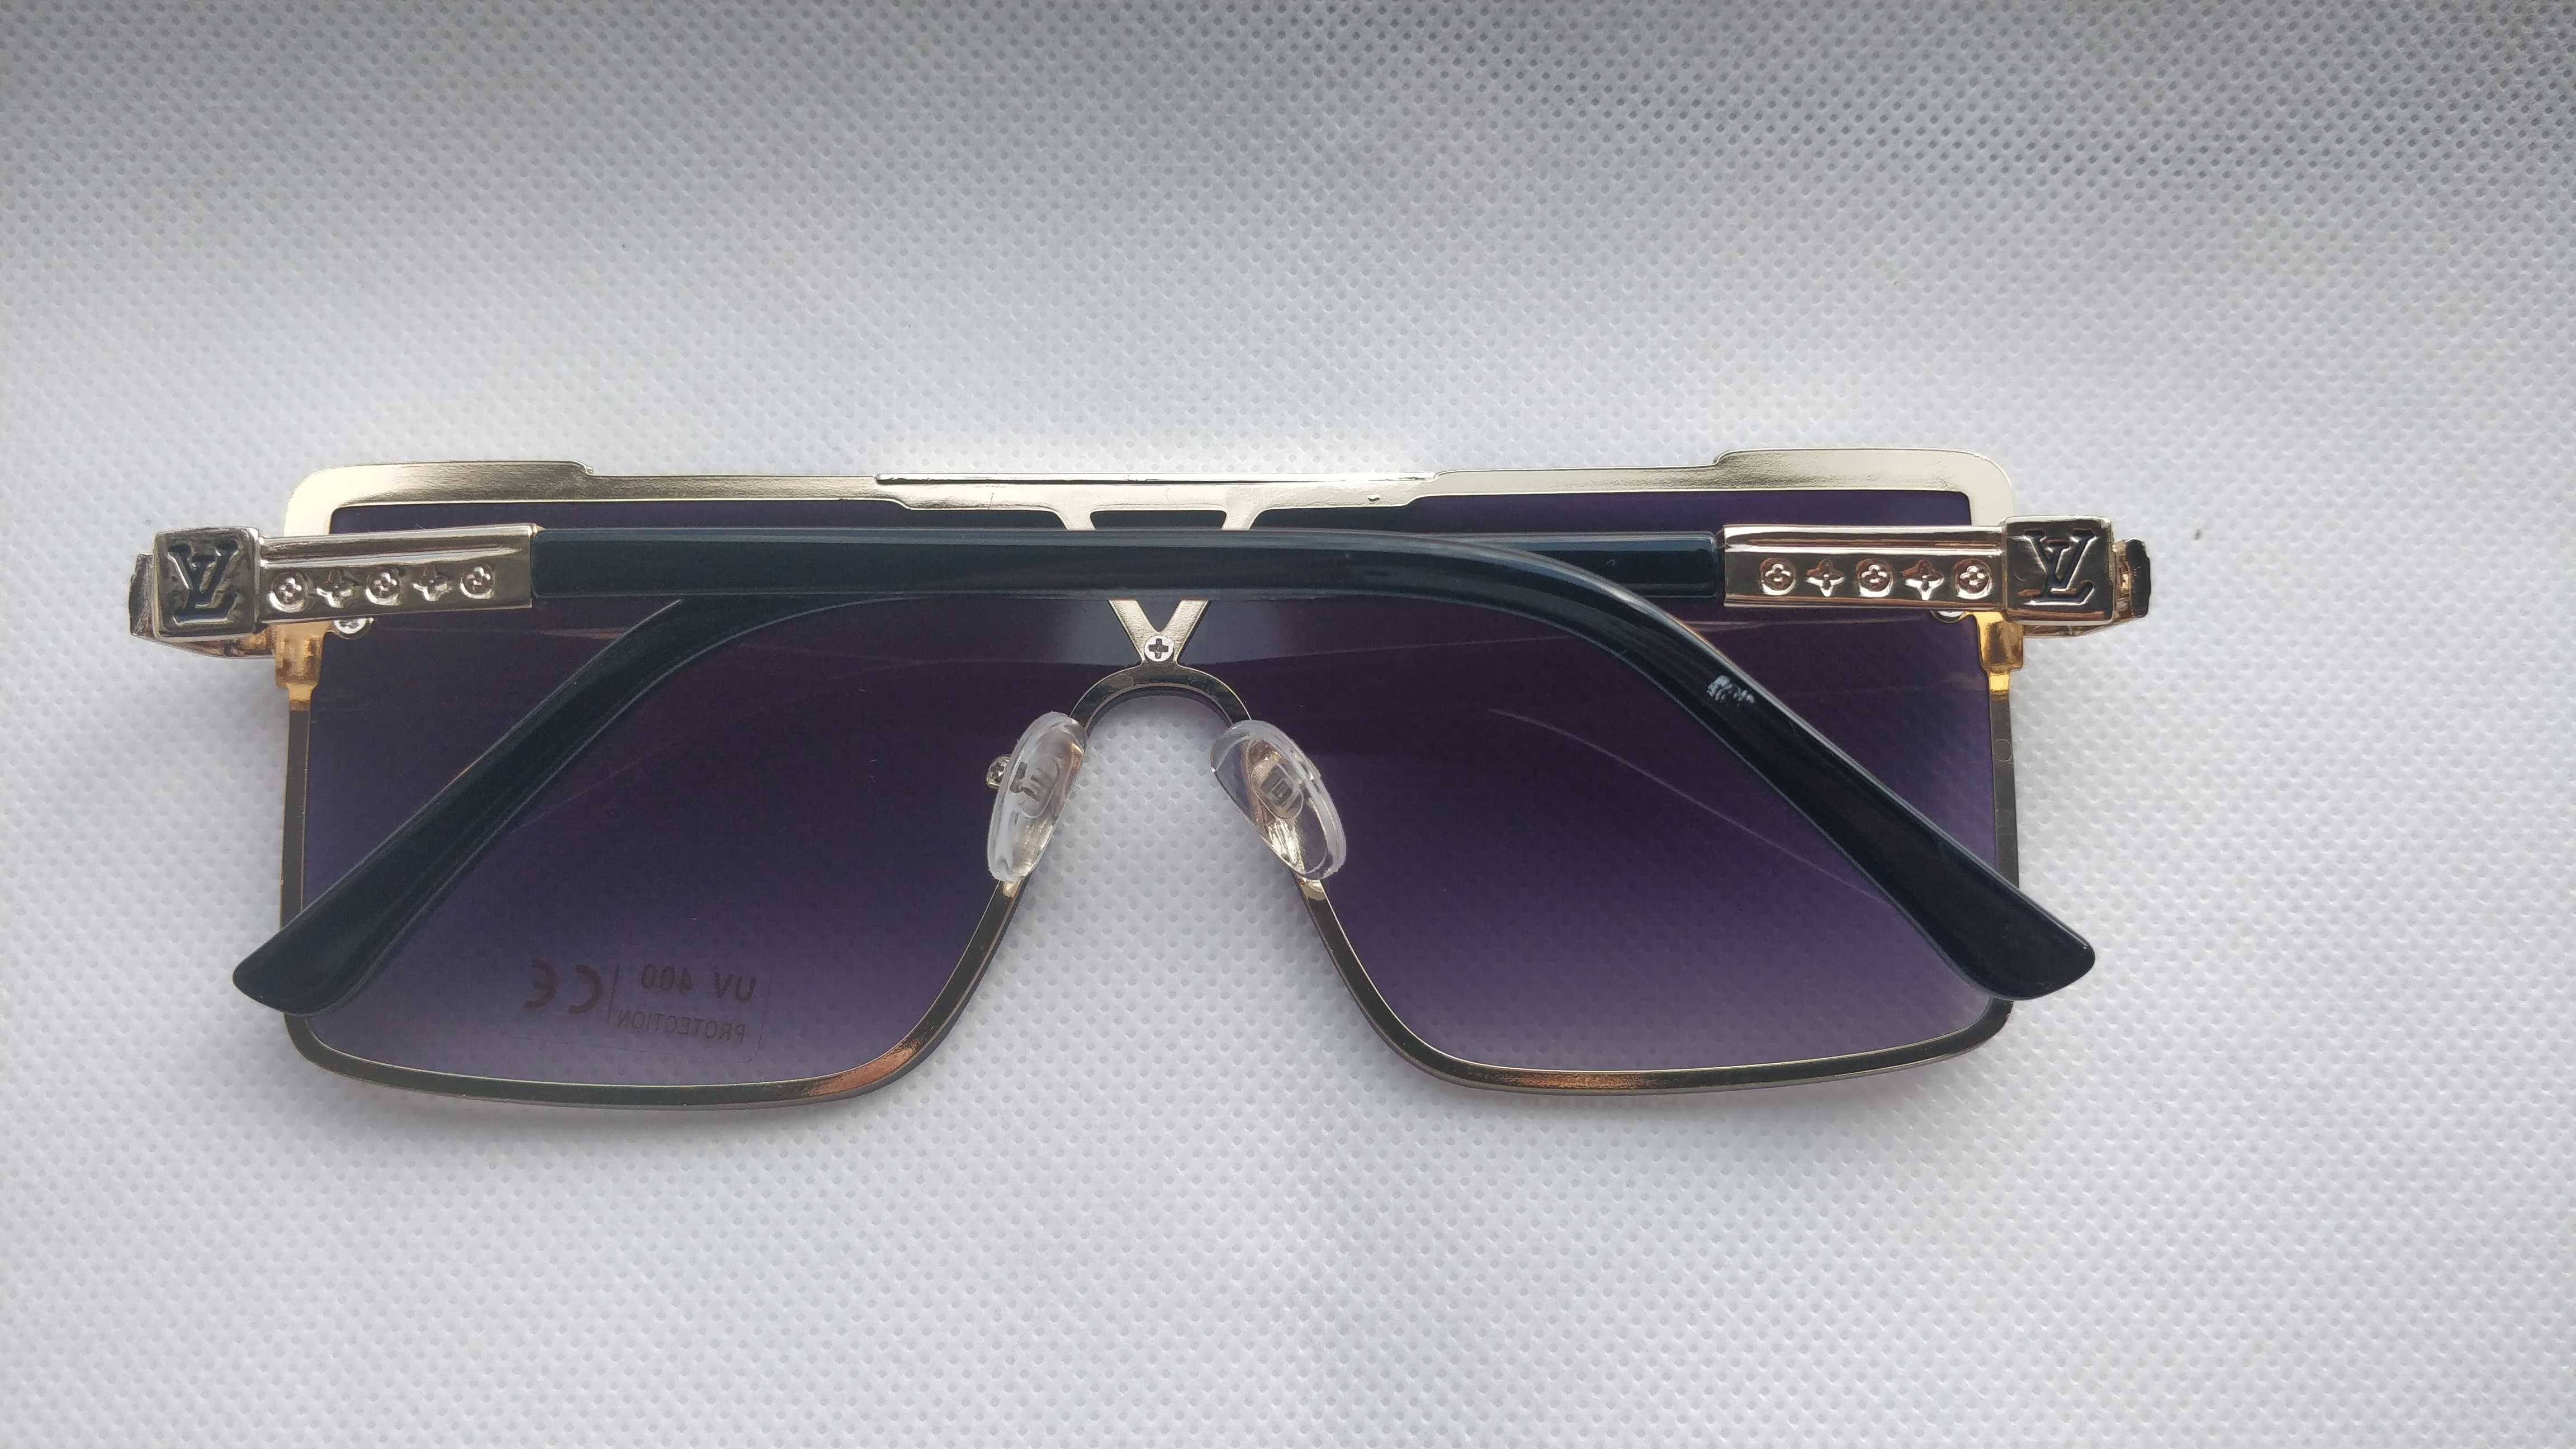 Ochelari de soare Louis Vuitton, lentile mov, model 2